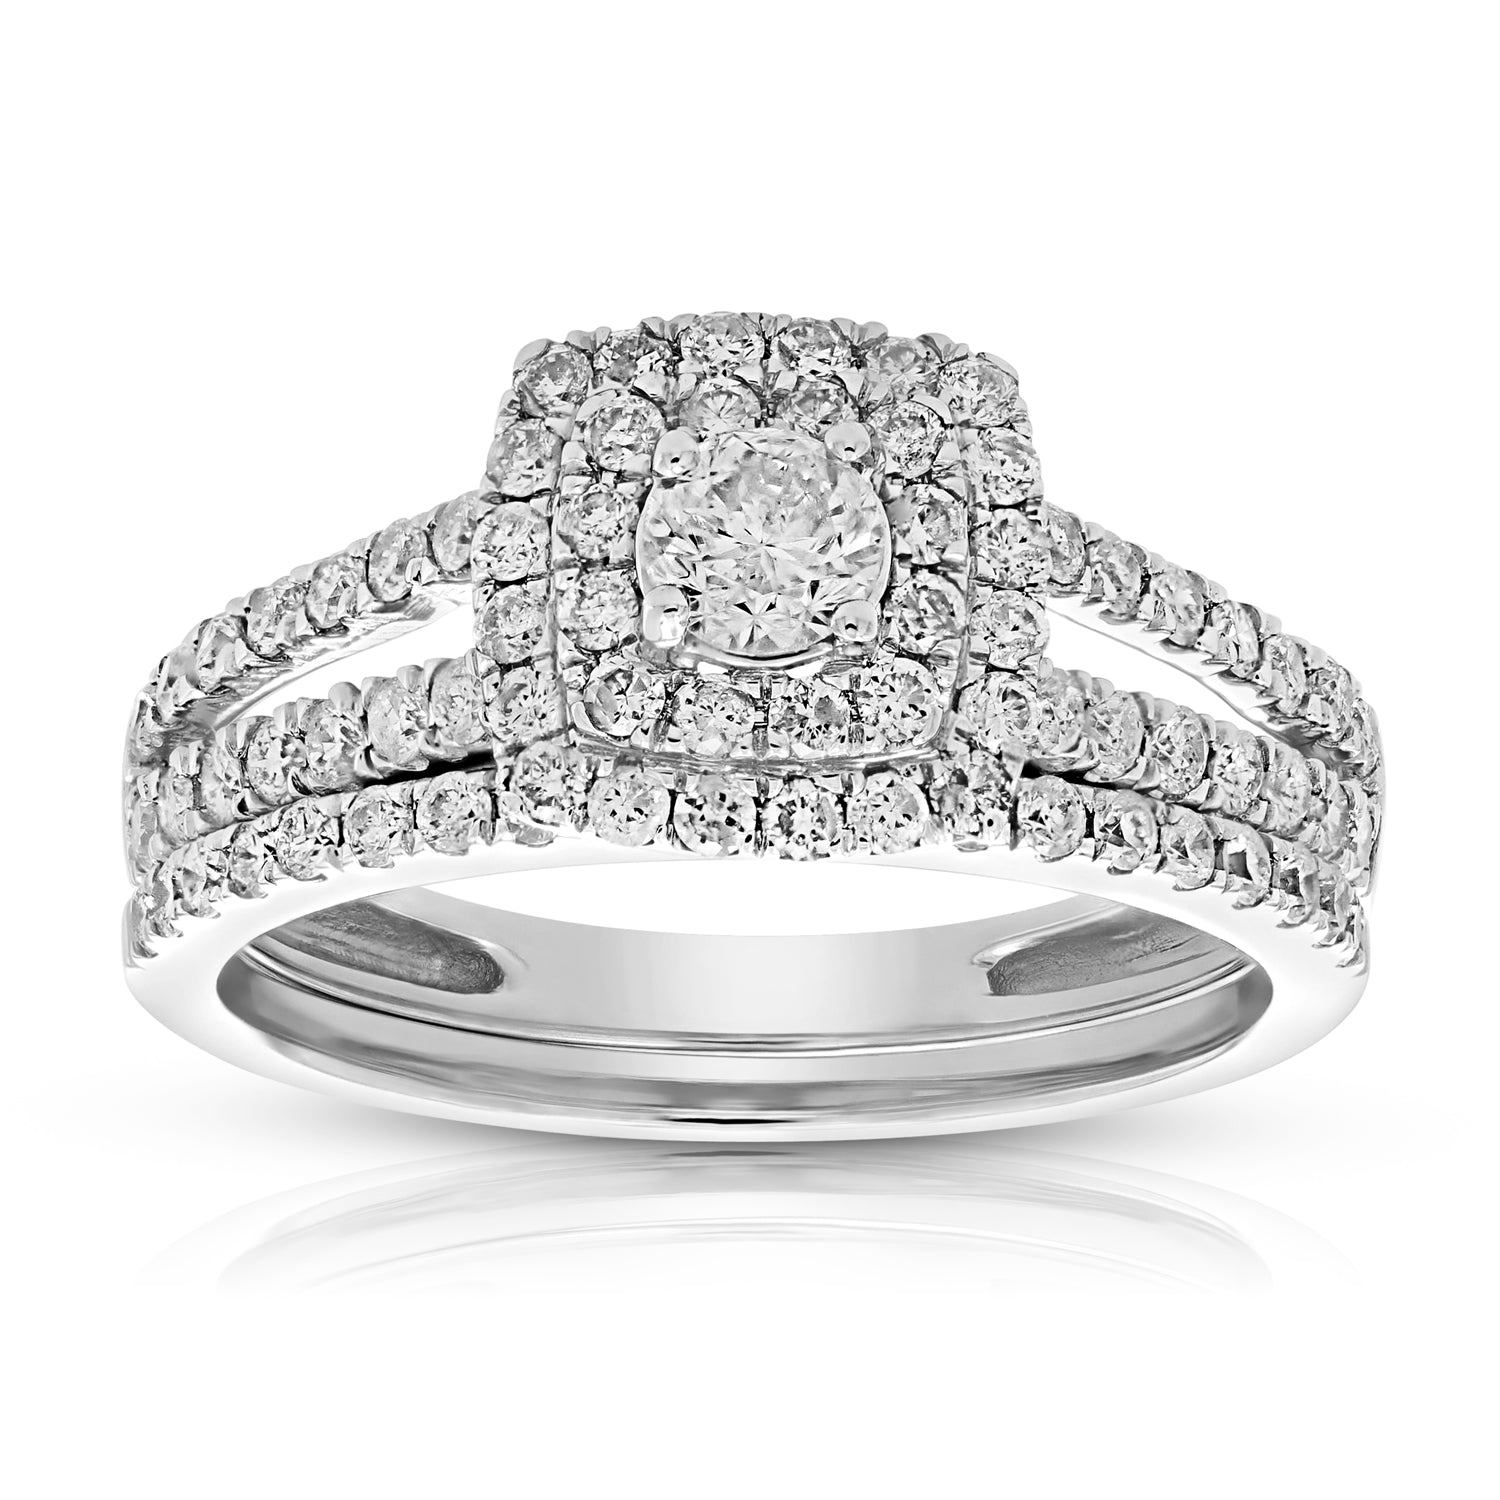 1 cttw Diamond Prong Set Wedding Engagement Ring Set 14K White Gold Bridal Style